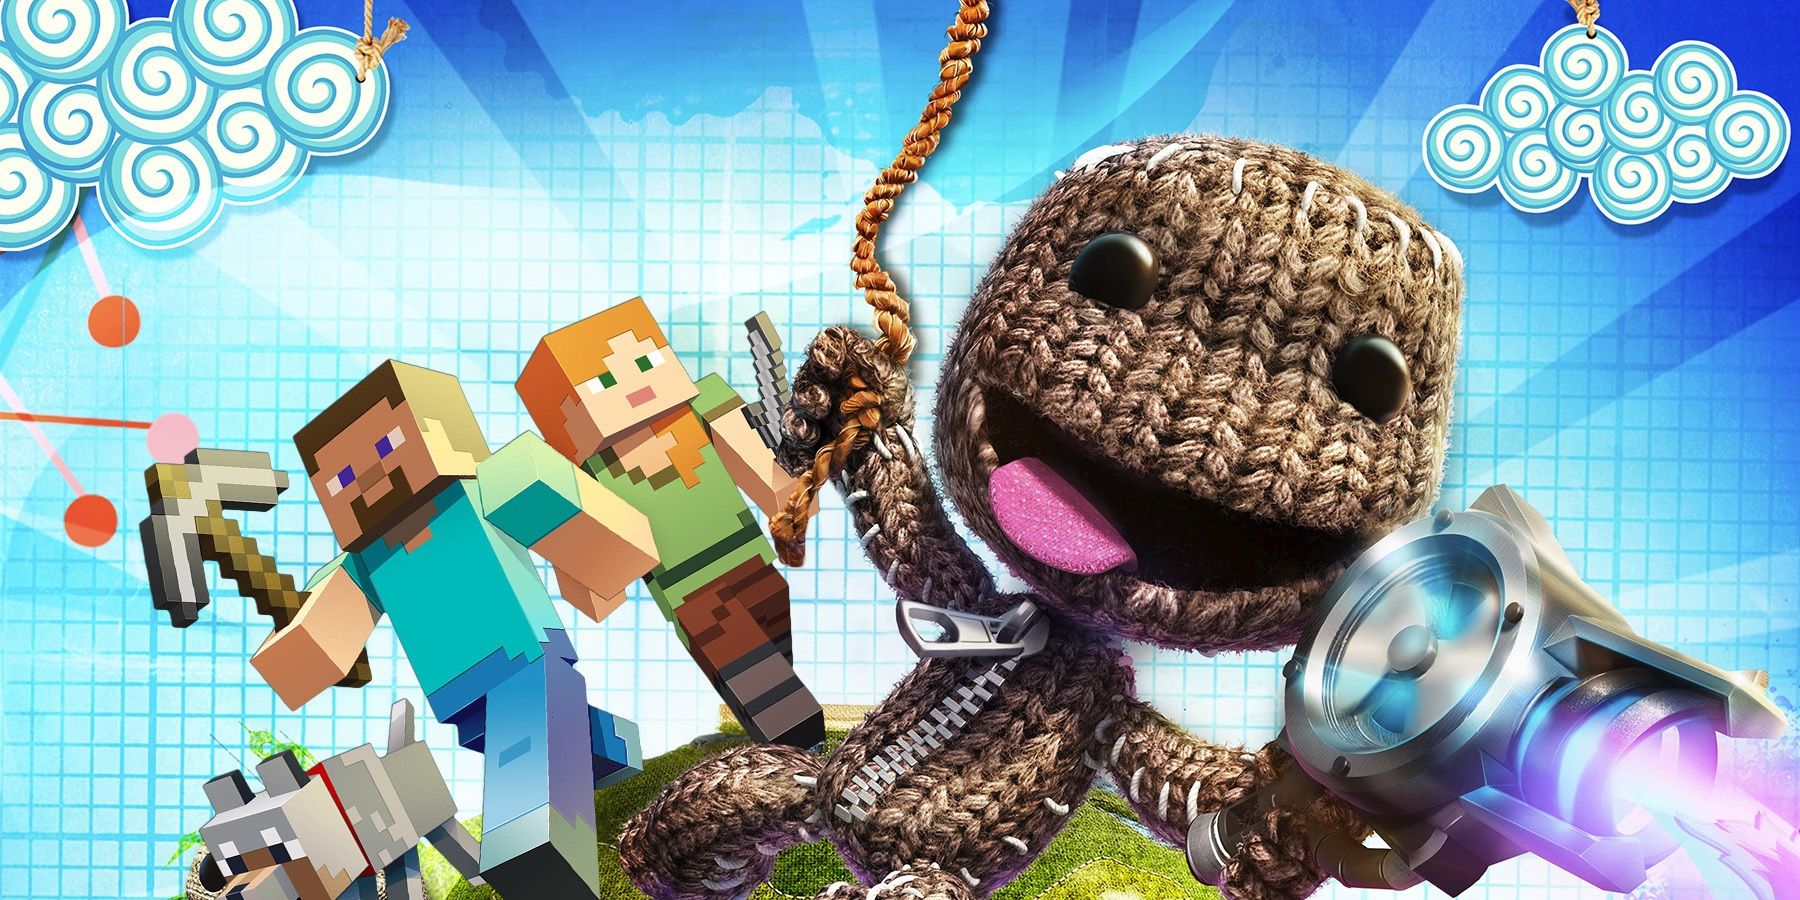 Minecraft With LittleBigPlanet's Sackboy